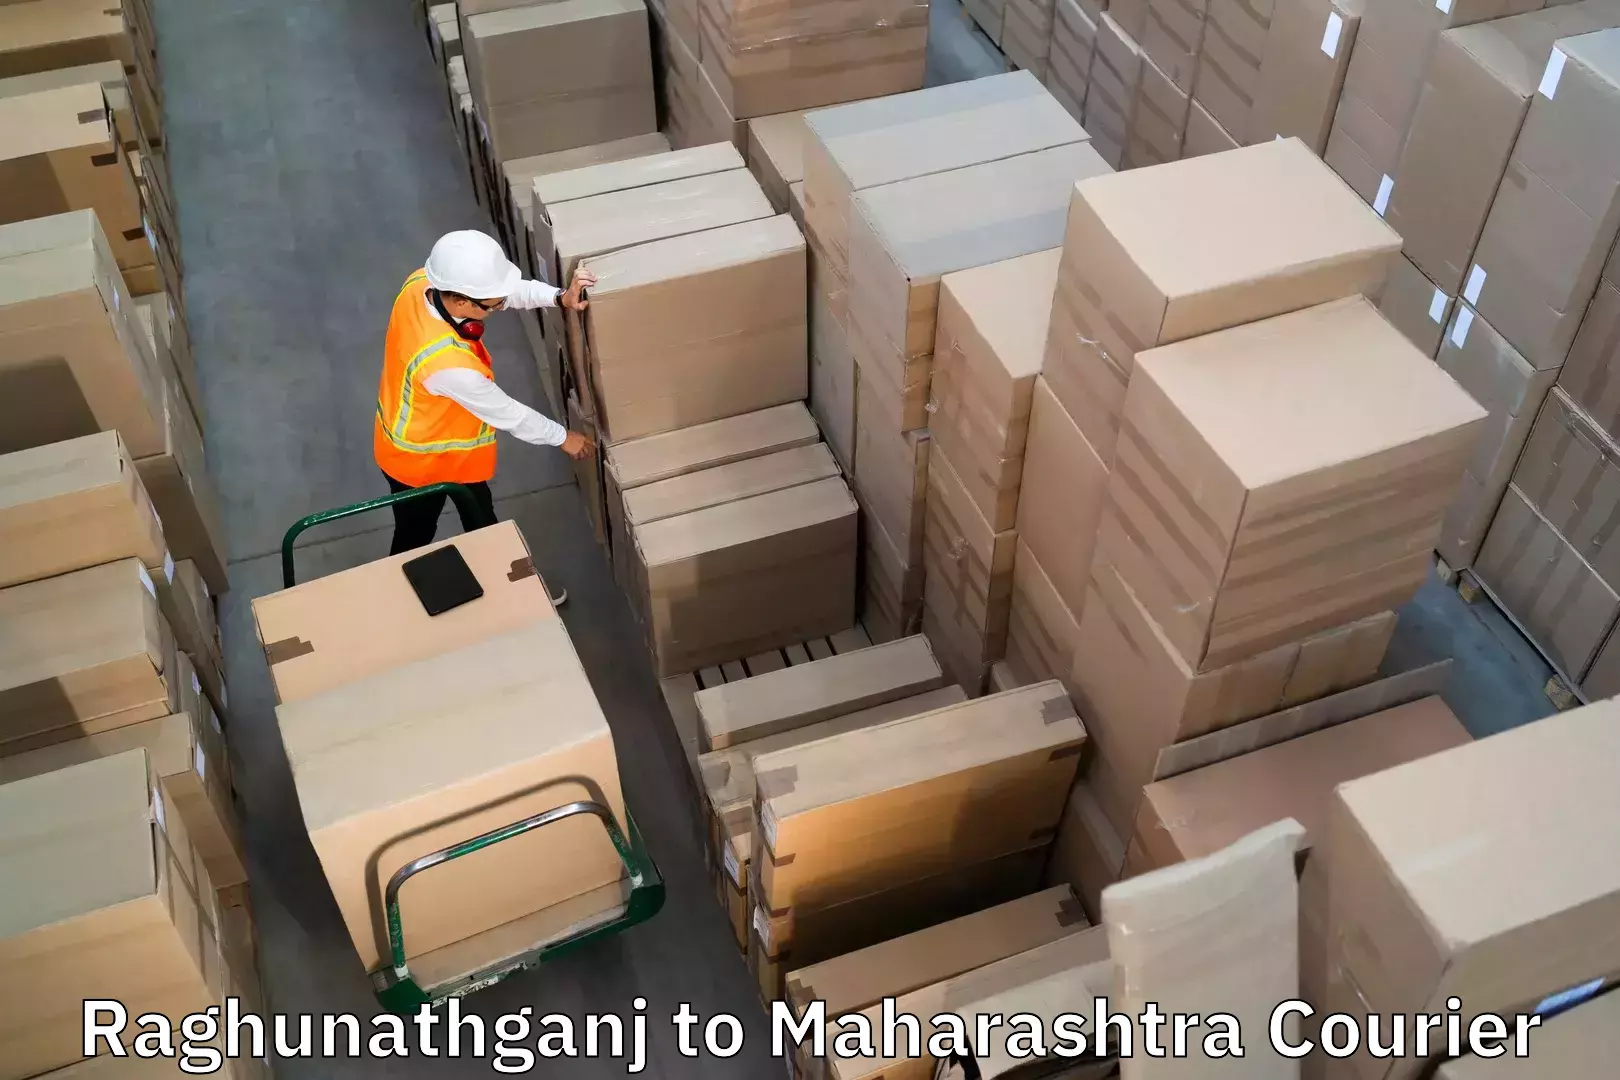 Luggage shipment specialists Raghunathganj to Navi Mumbai